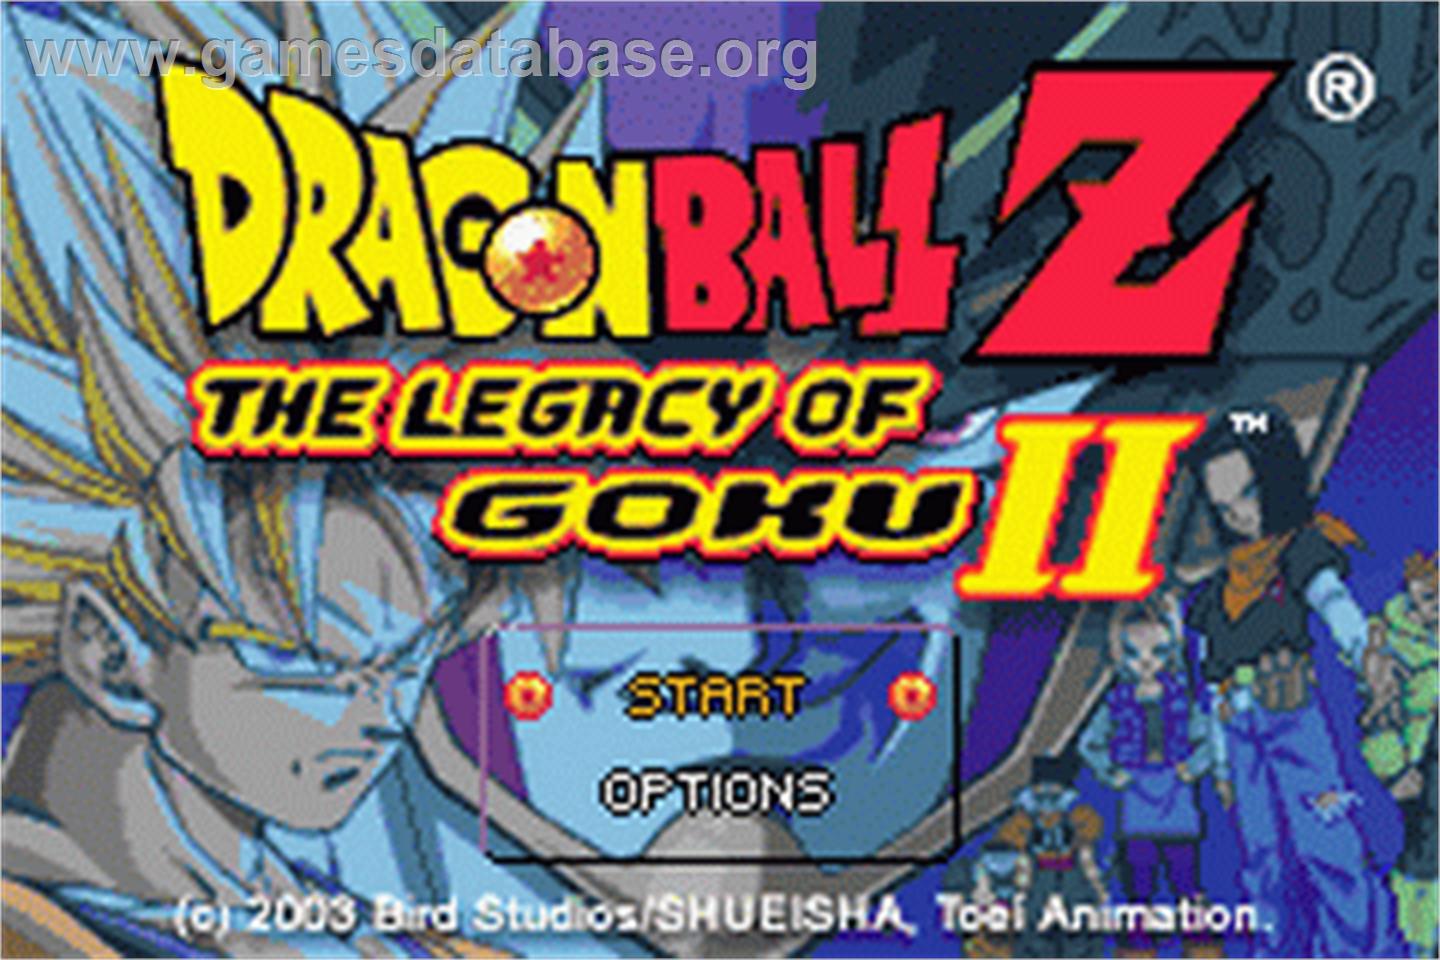 Dragonball Z: Legacy of Goku 2 - Nintendo Game Boy Advance - Artwork - Title Screen